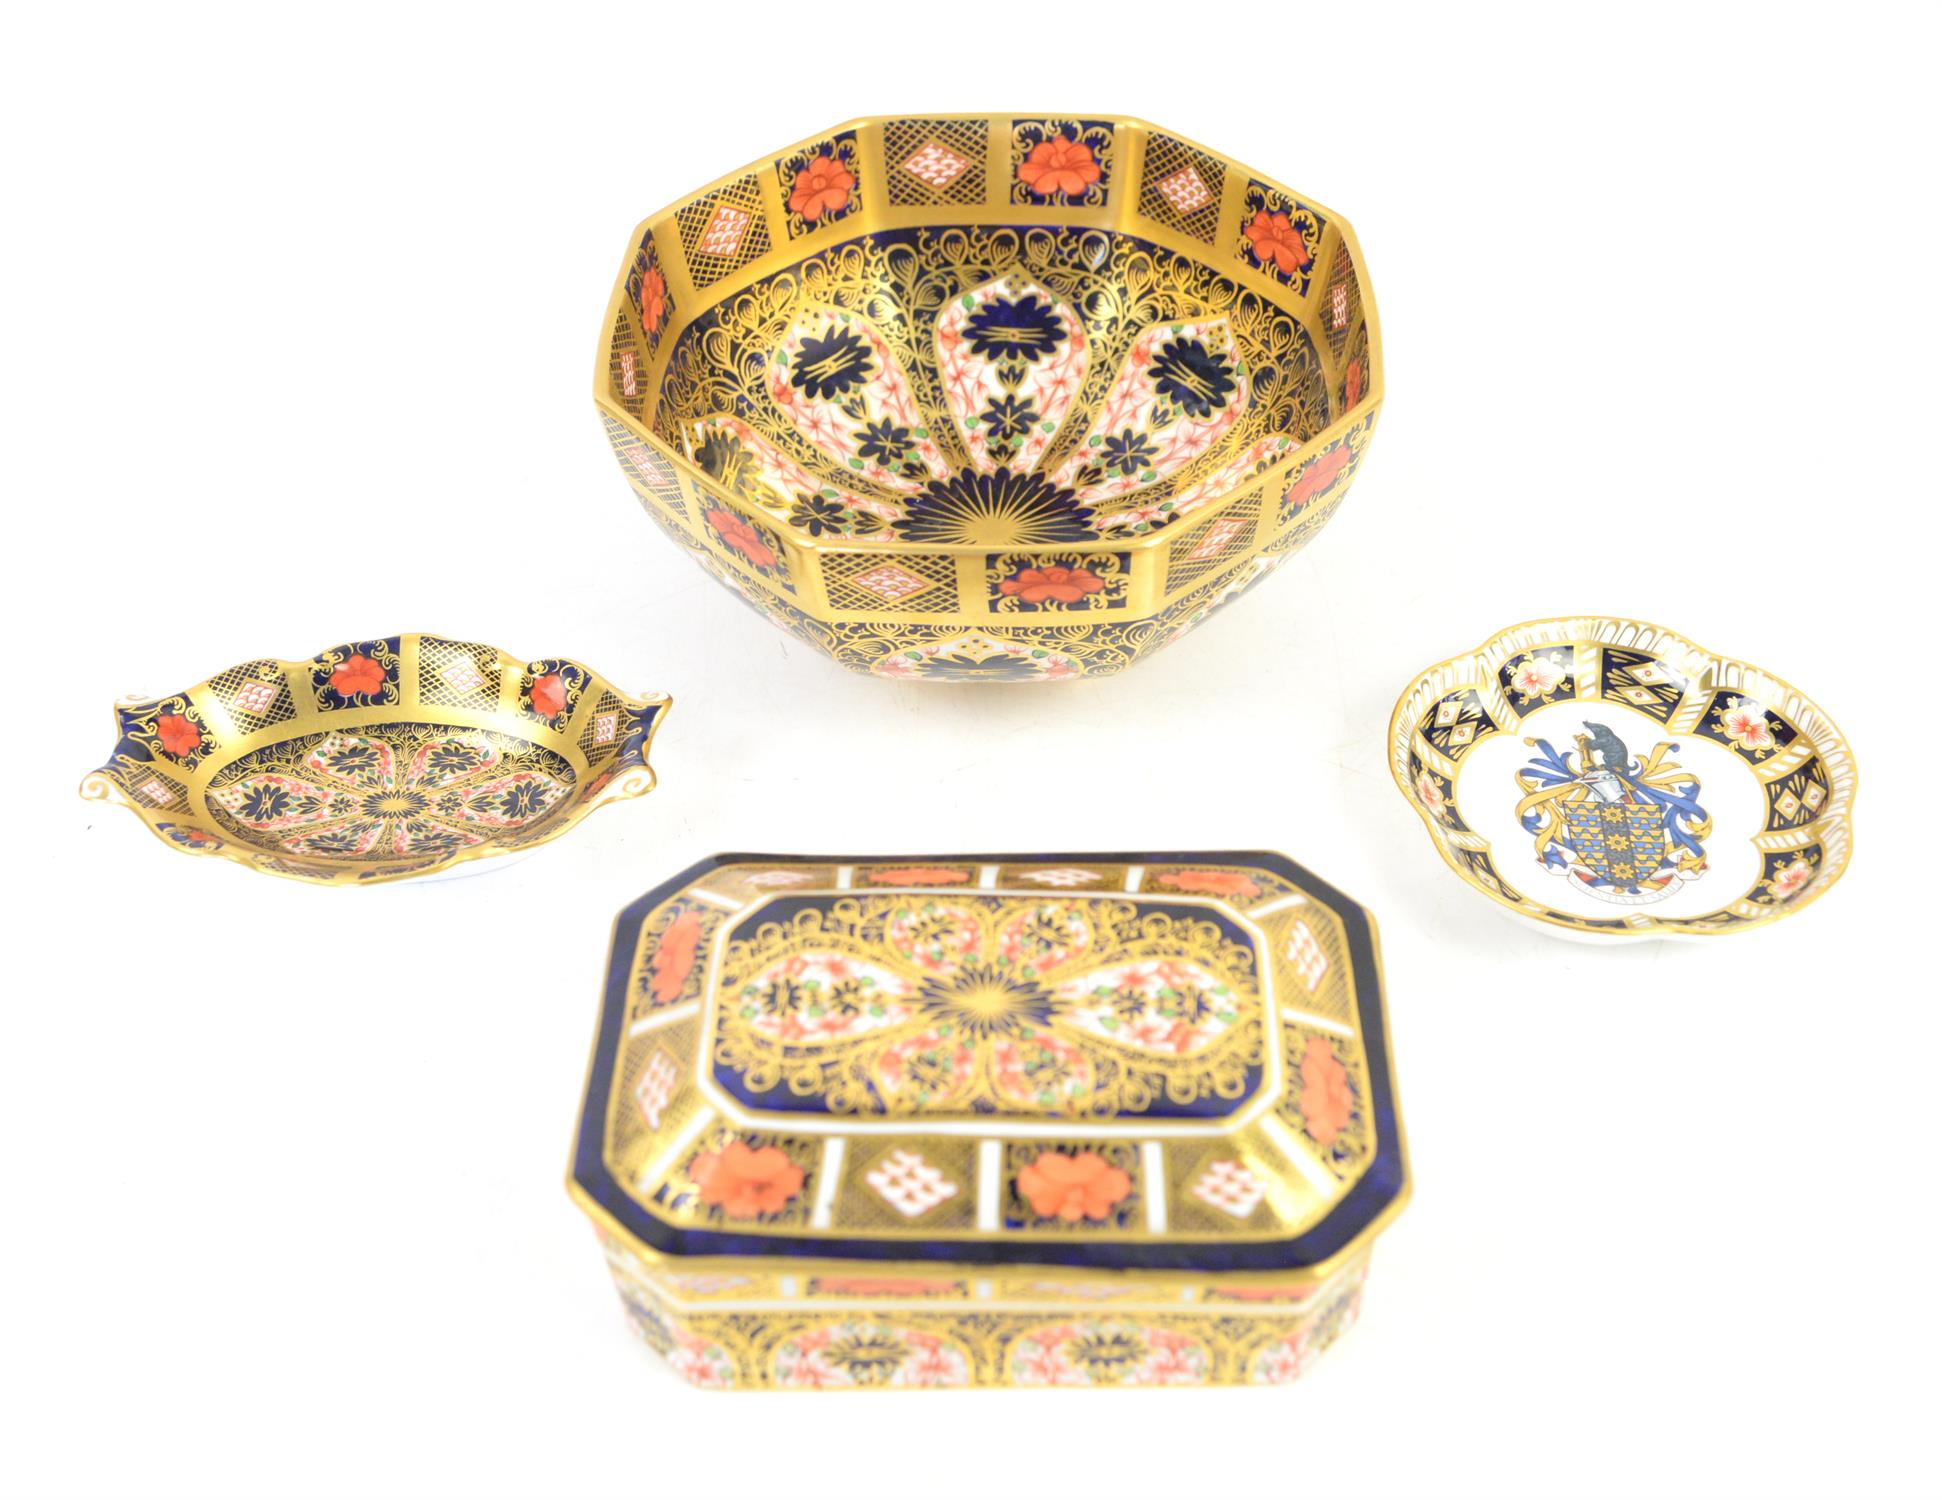 Royal Crown Derby Imari pattern octagonal bowl, 19.5cm diam, an octagonal box and cover pattern